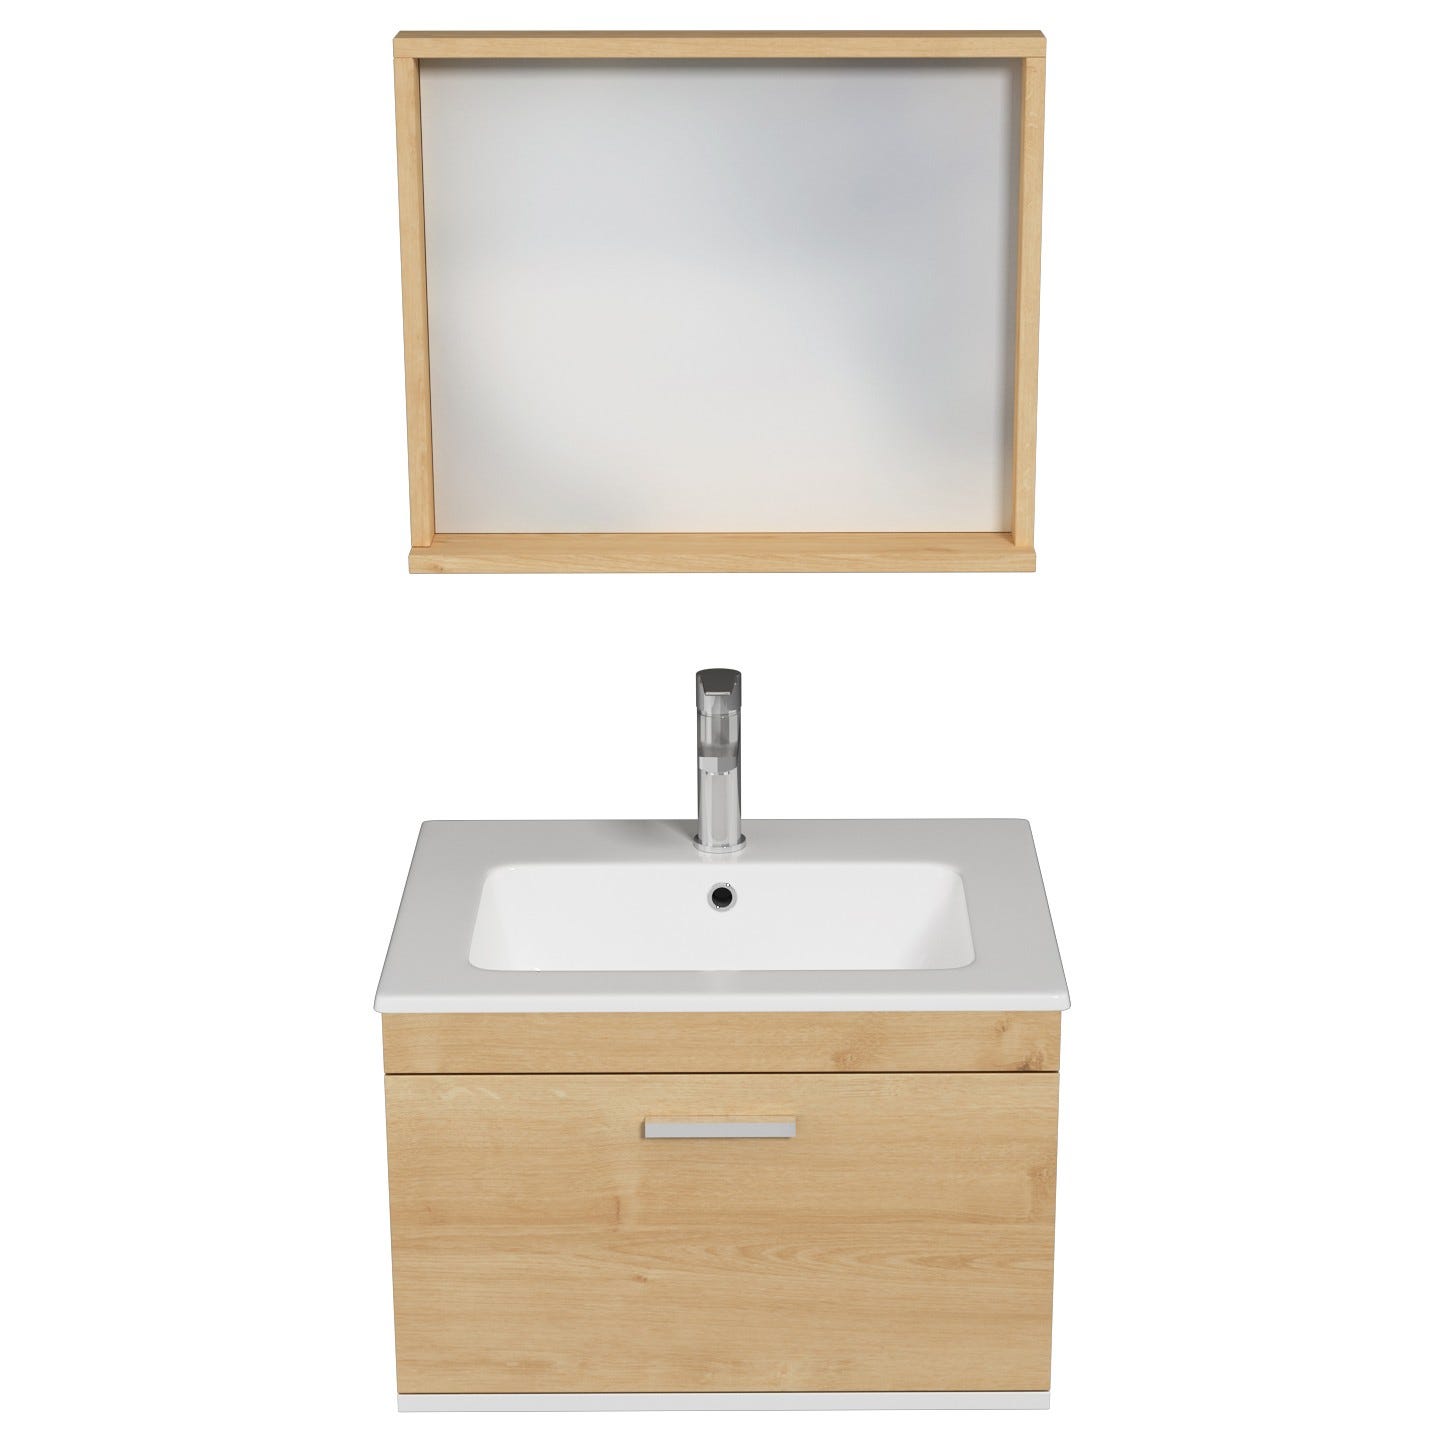 RUBITE Meuble salle de bain simple vasque 1 tiroir chêne clair largeur 60 cm + miroir cadre 4